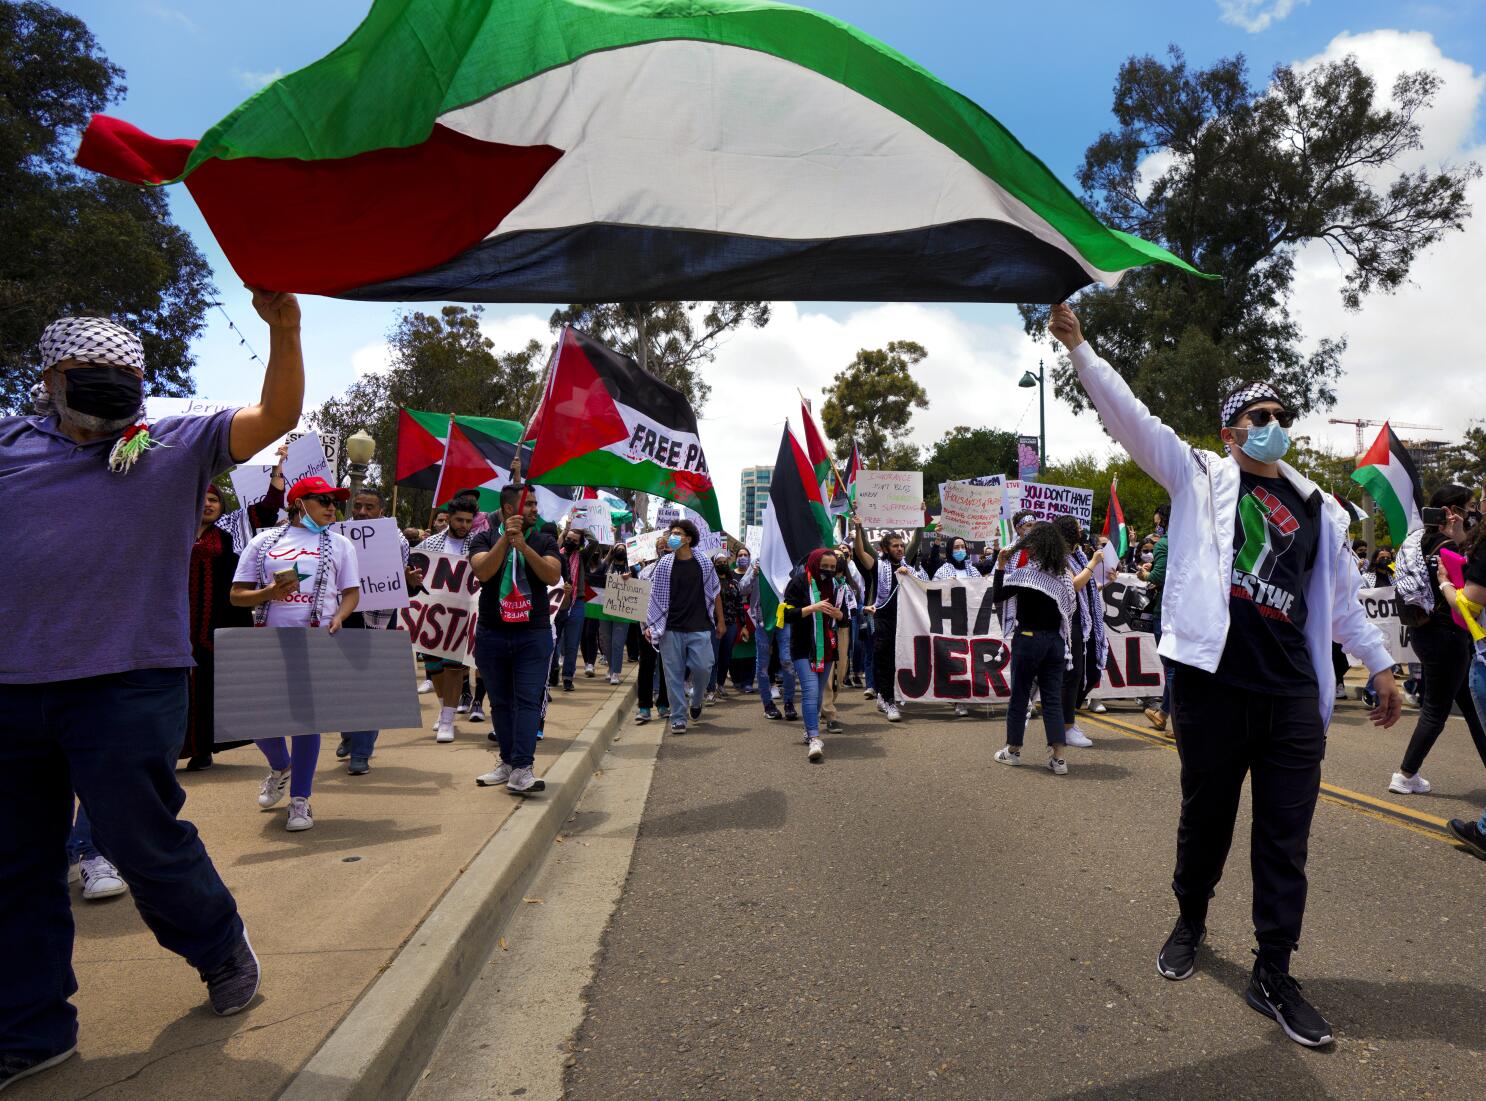 Pro-Israel rally draws hundreds to Strip, Local Las Vegas